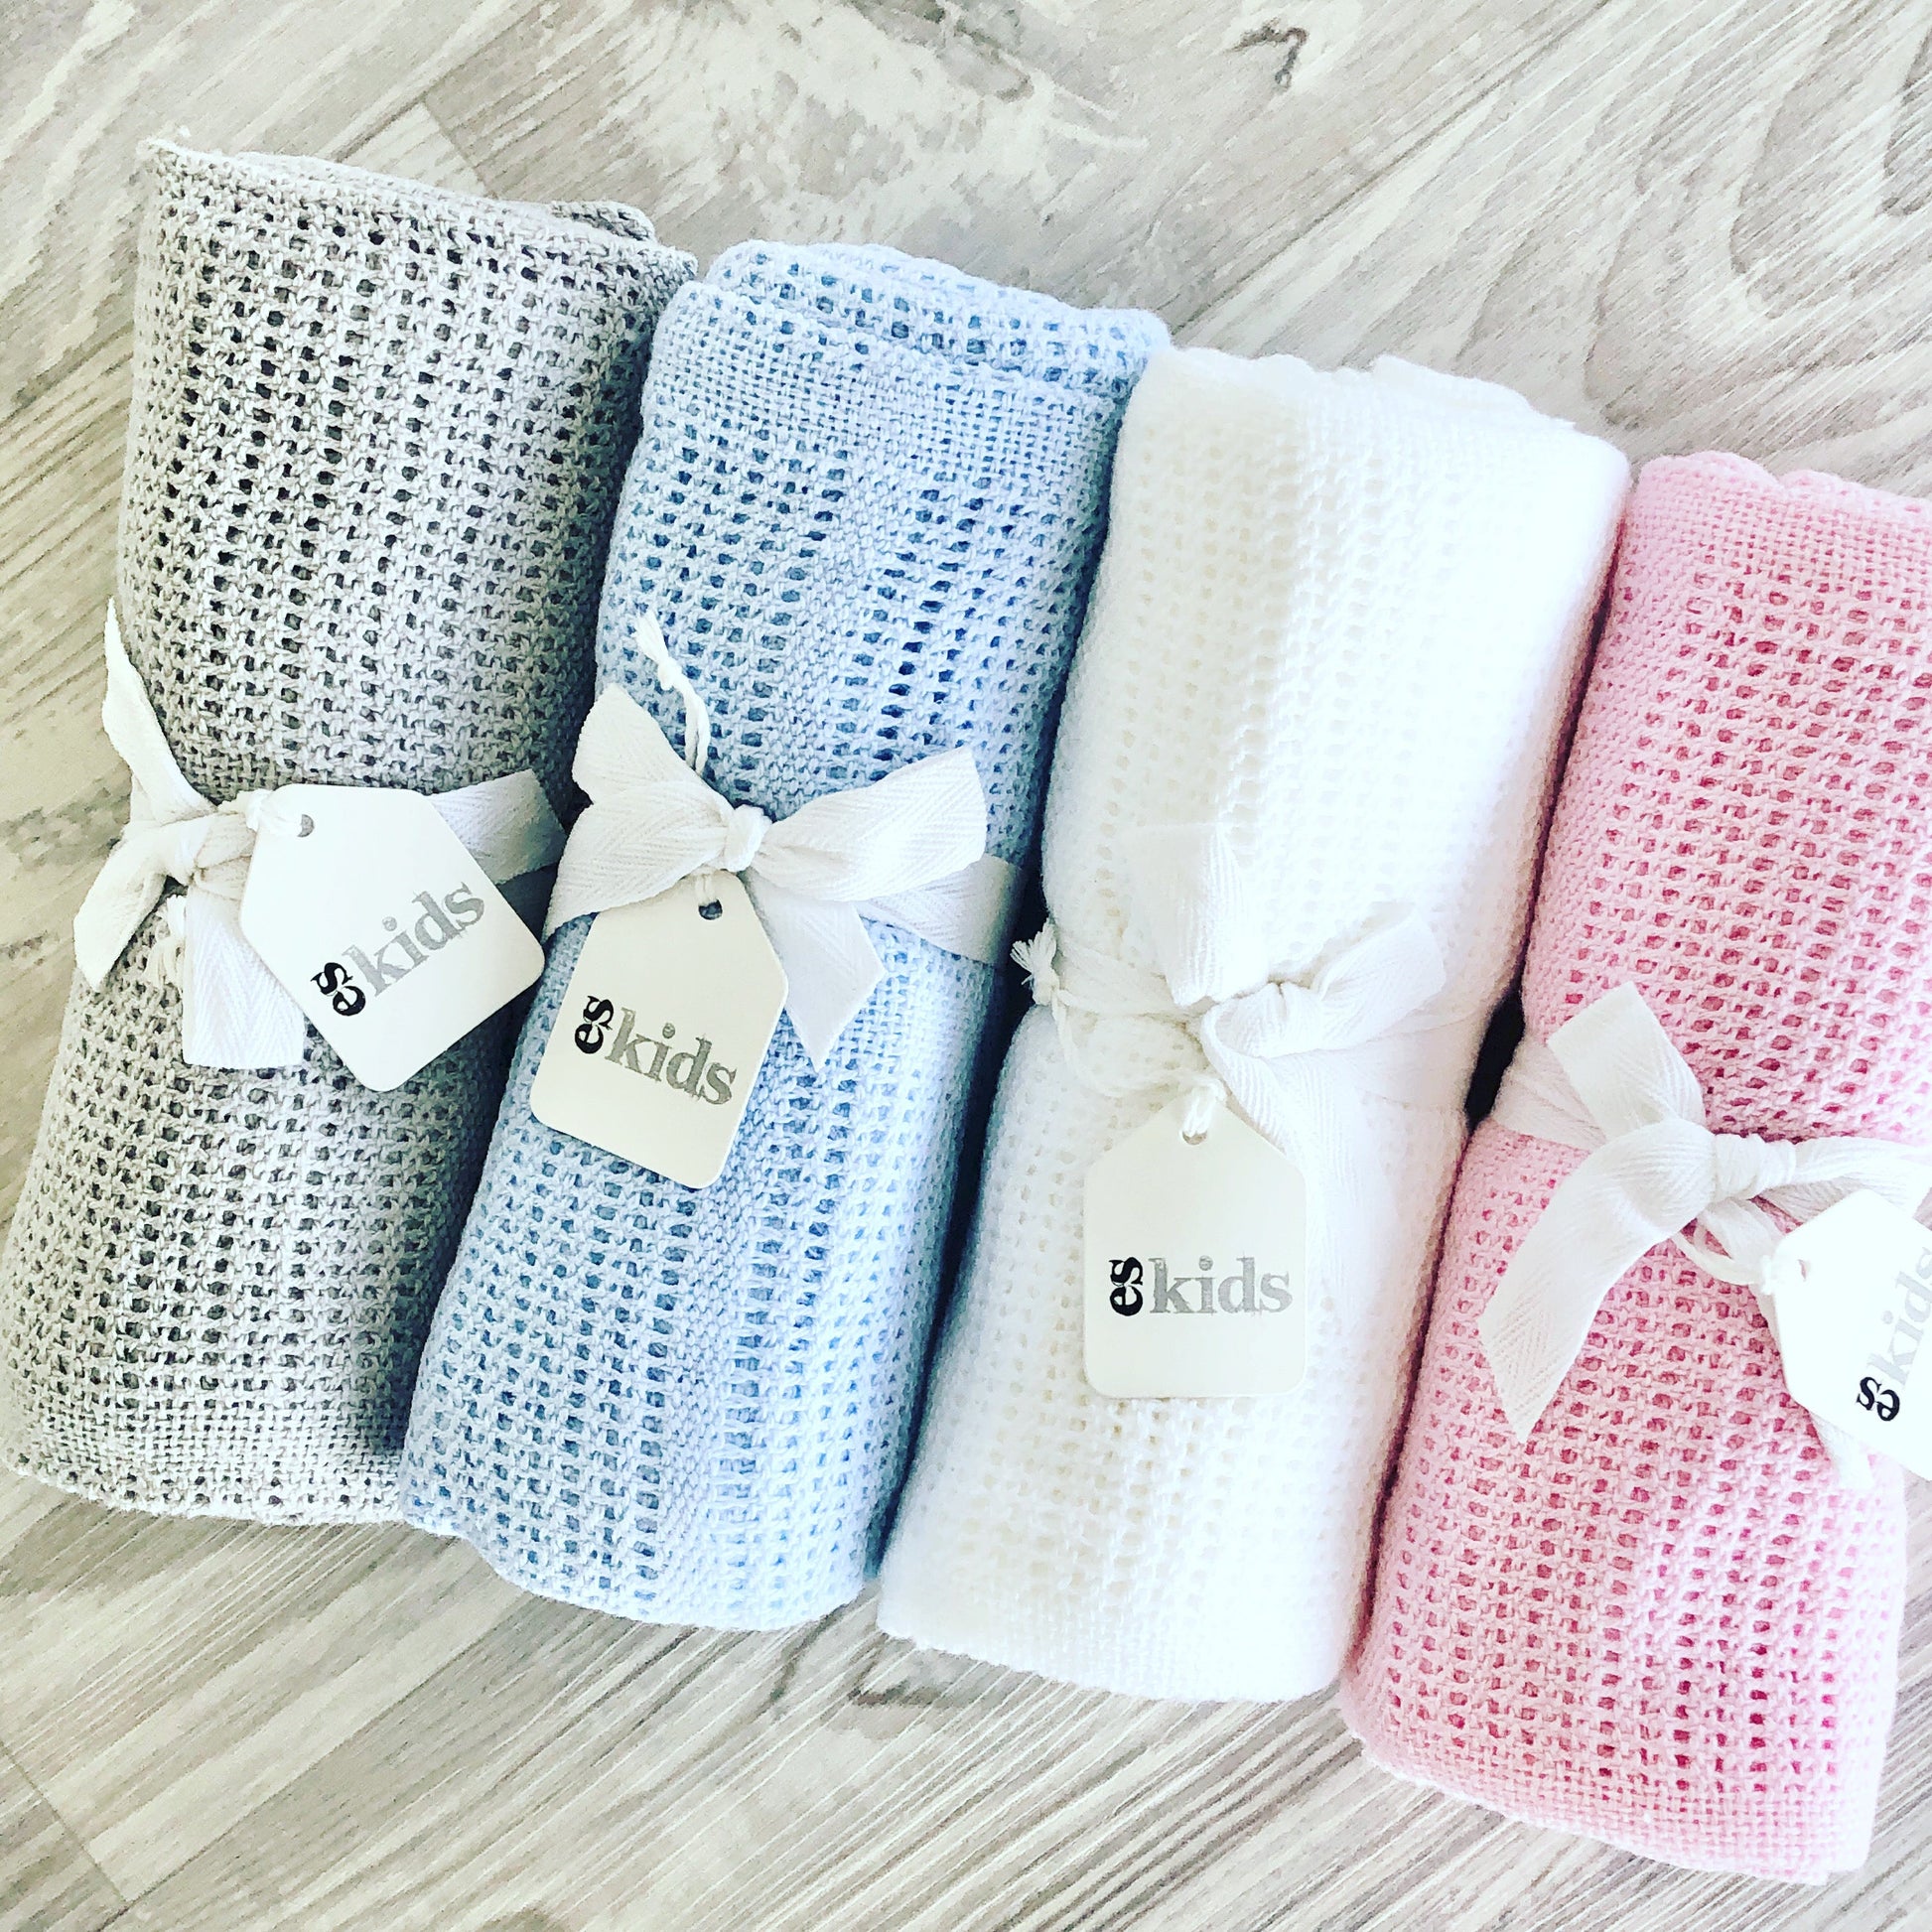 eskids-crochet-cotton-baby-blanket-70x90cm-the little haven